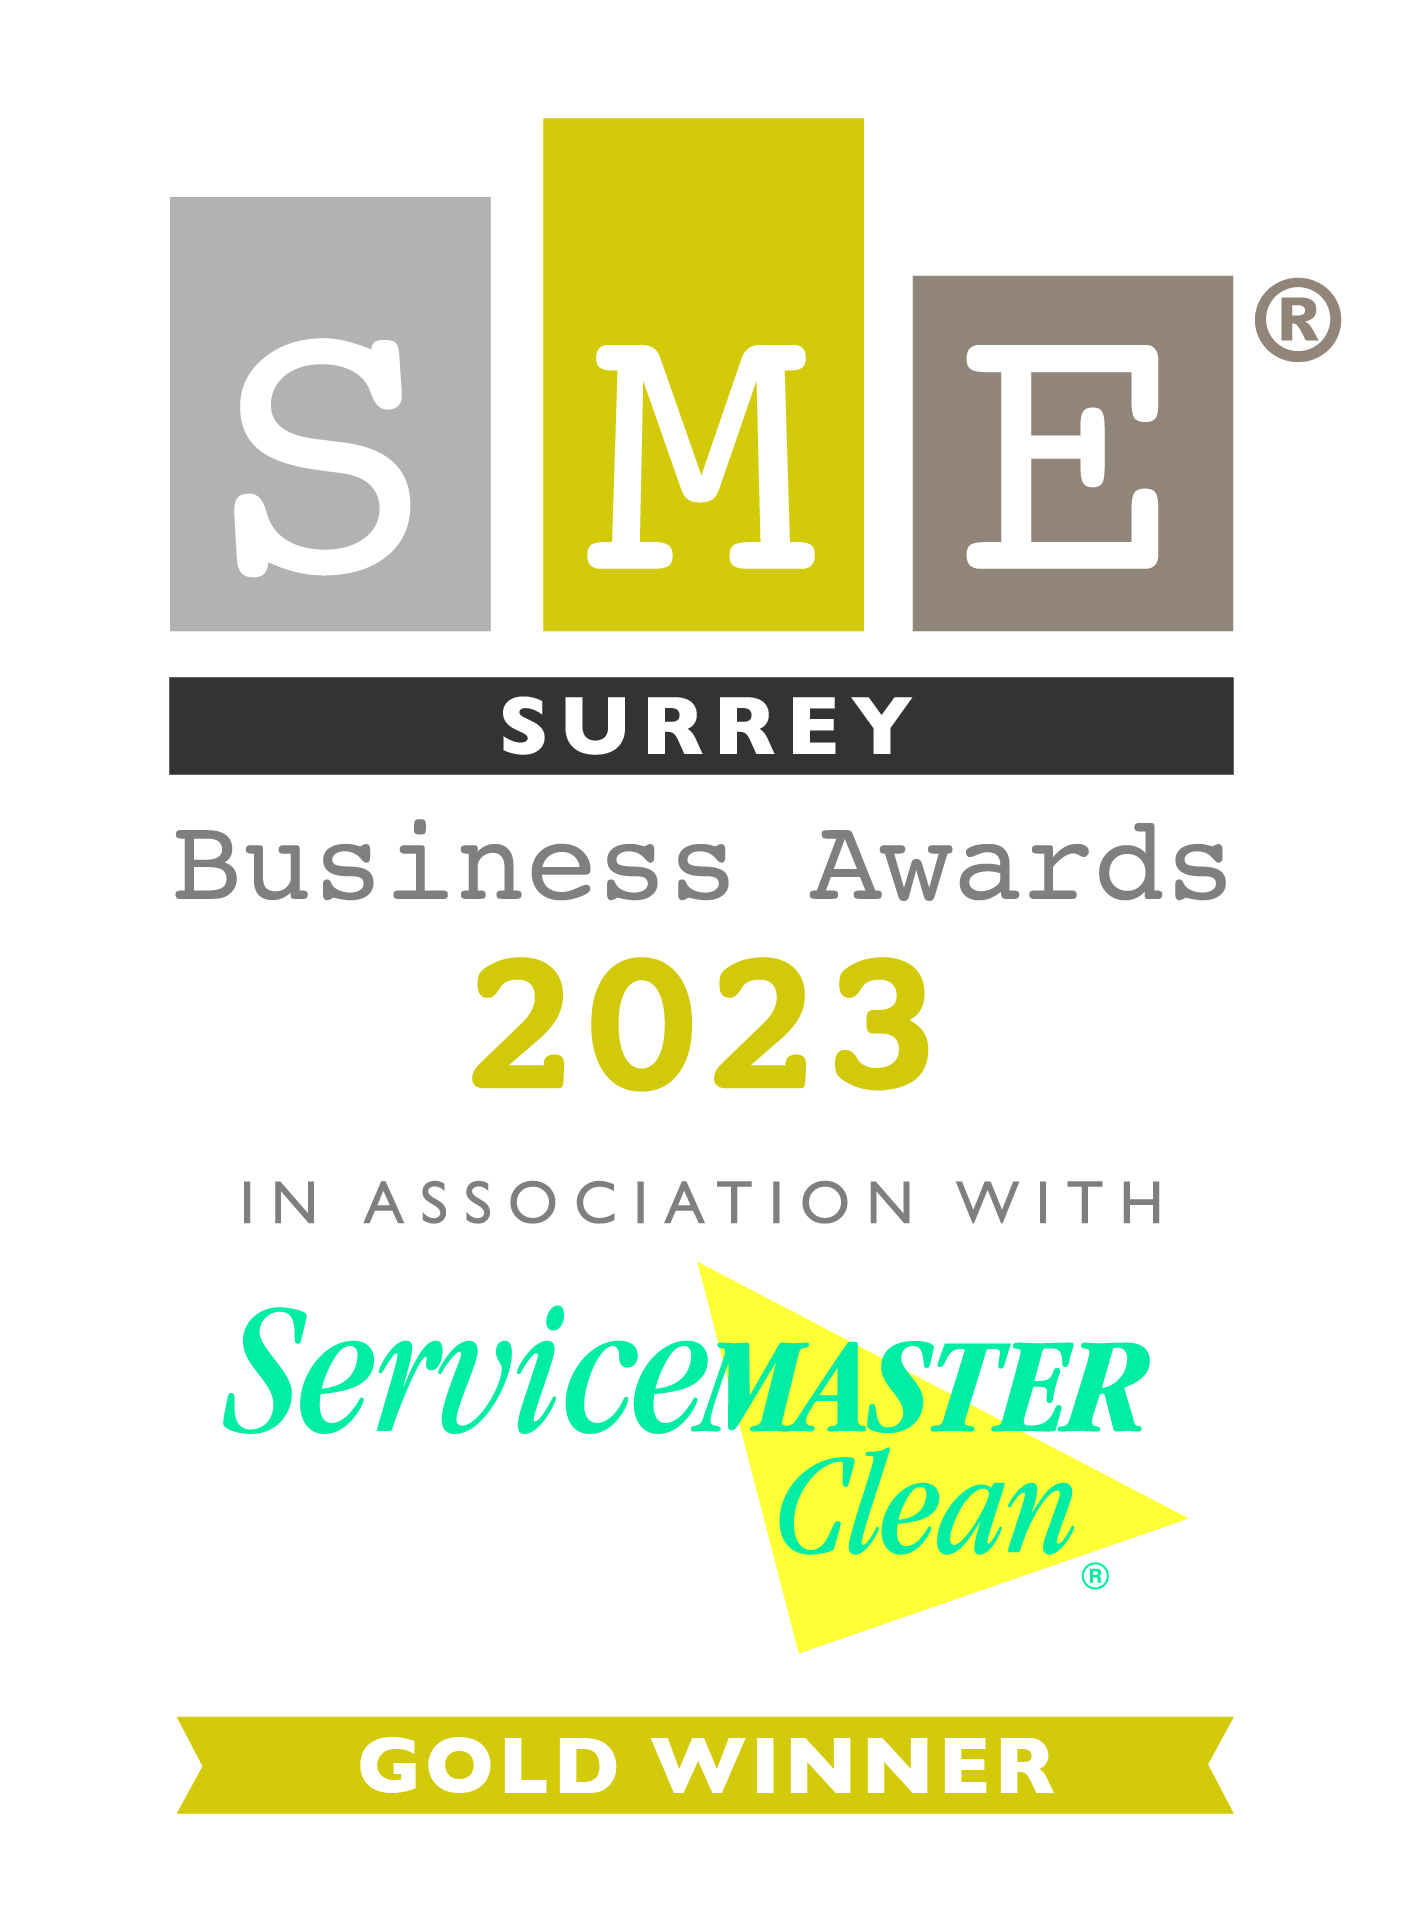 SME Surrey Gold winner logo